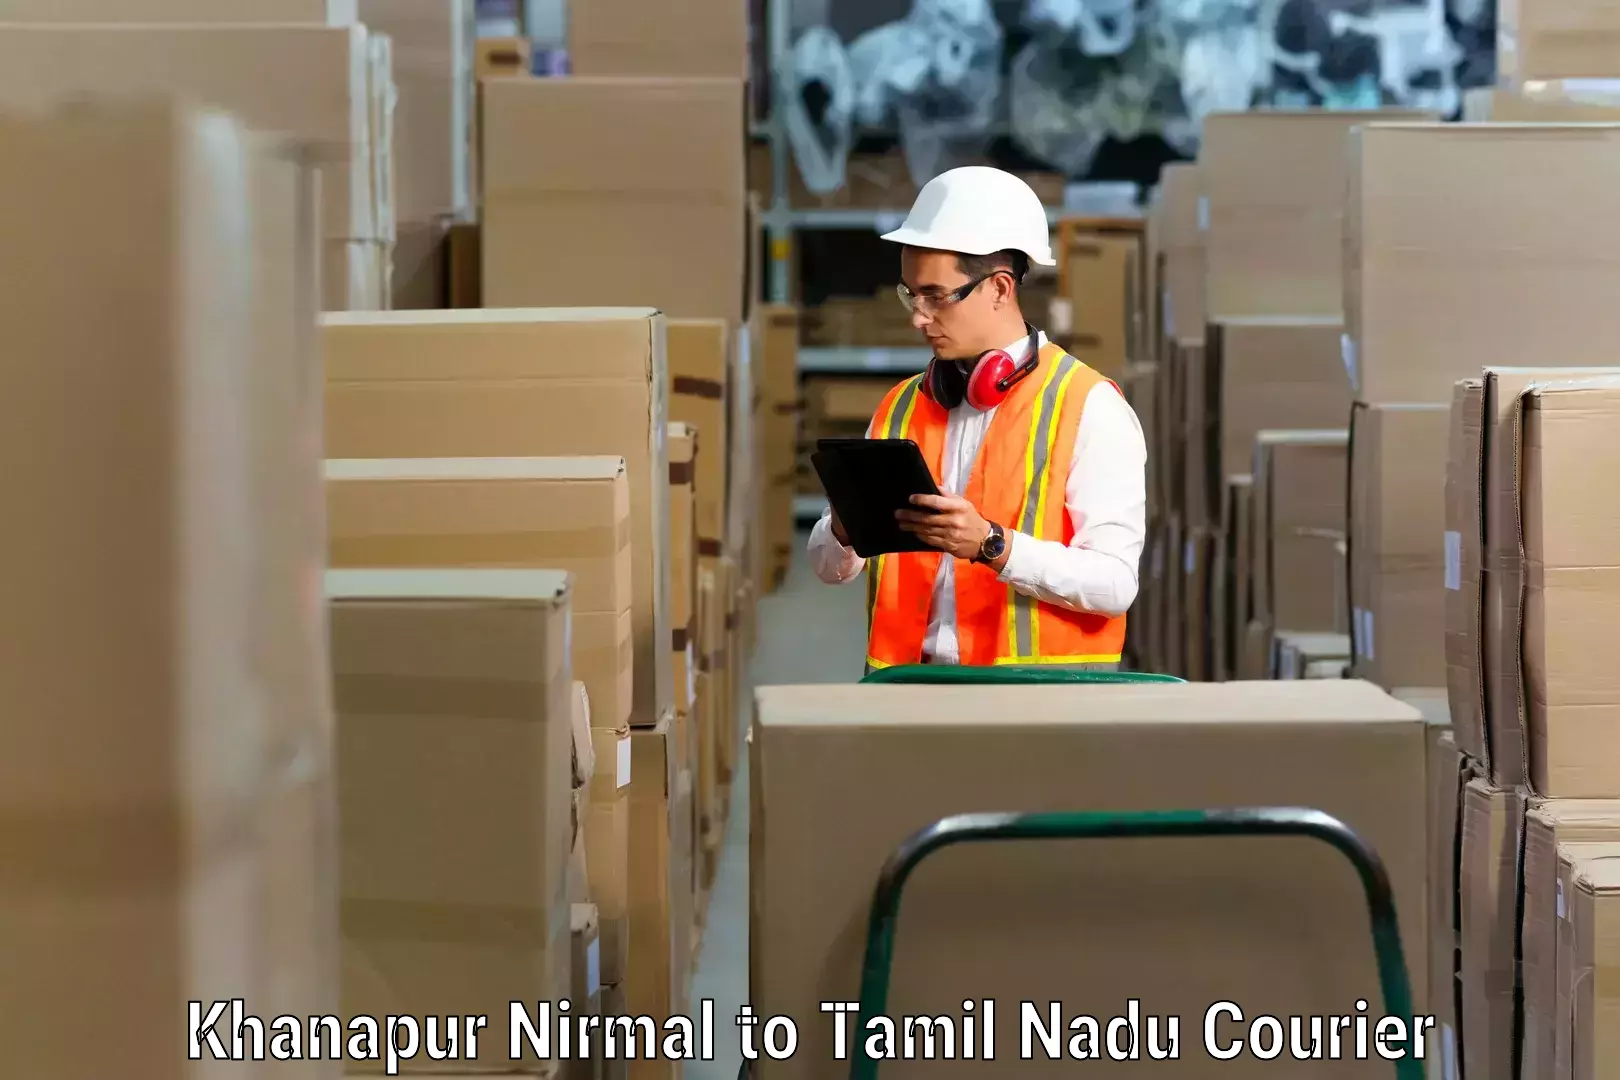 Furniture moving service Khanapur Nirmal to Thirukkattupalli